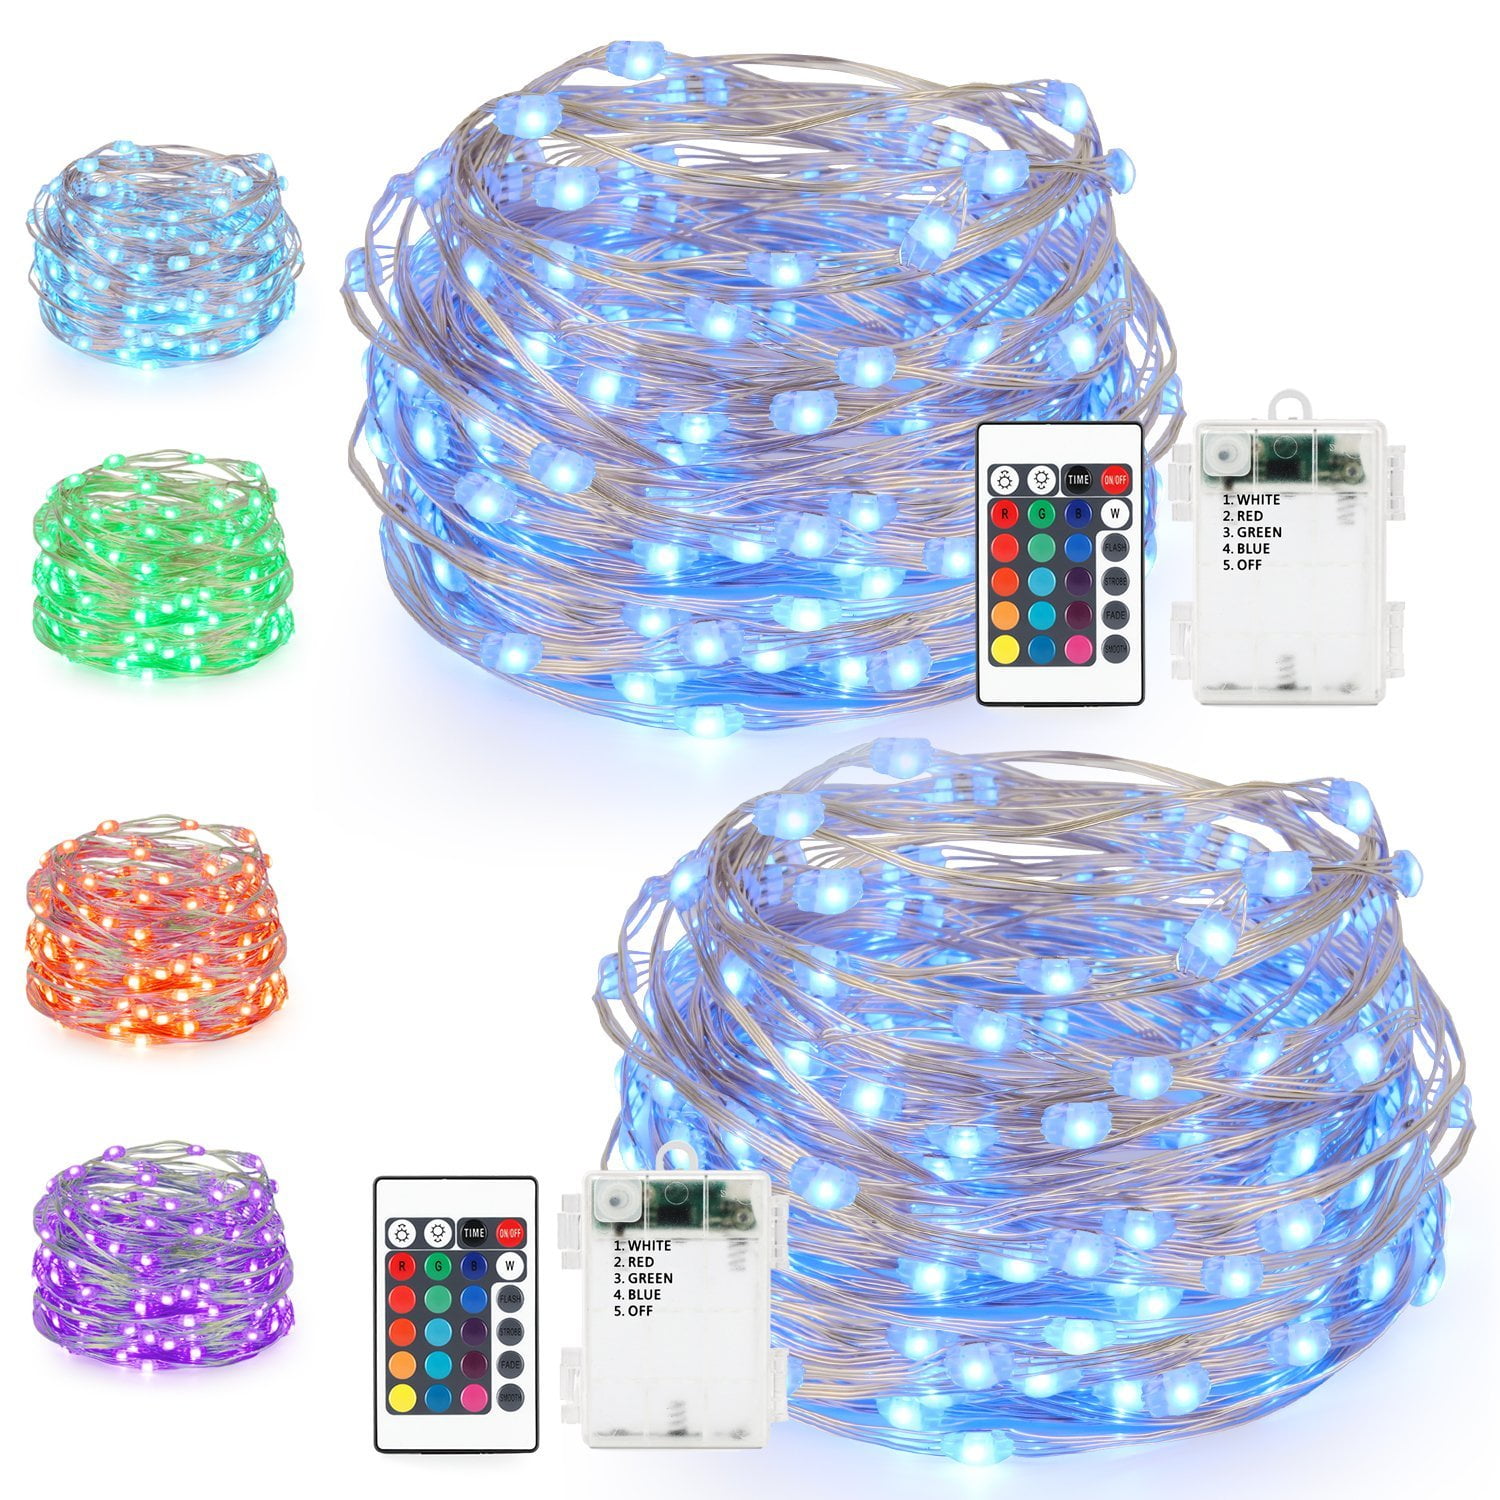 Led String Lights Kohree Battery, 24ct Color Changing Led Shatterproof Outdoor String Lights With Remote